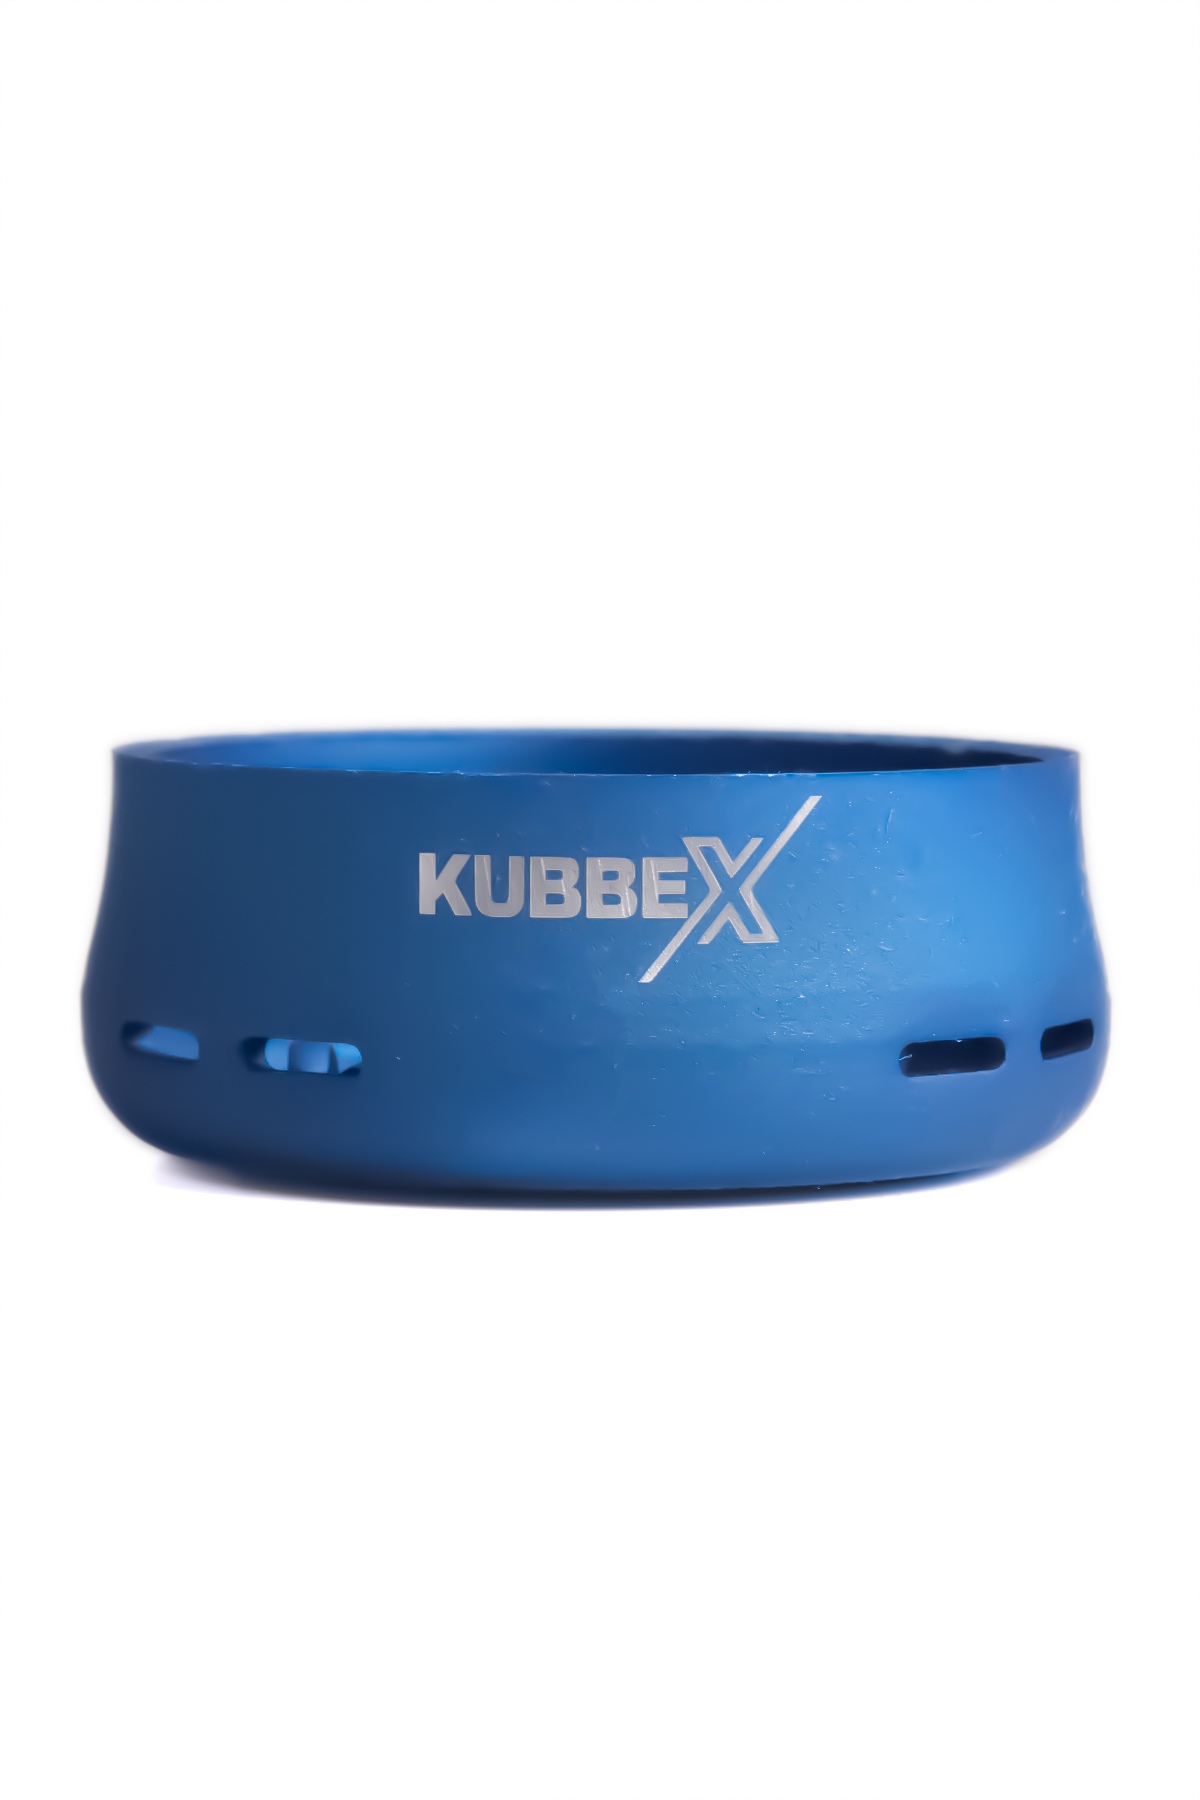 KUBBEX HMD